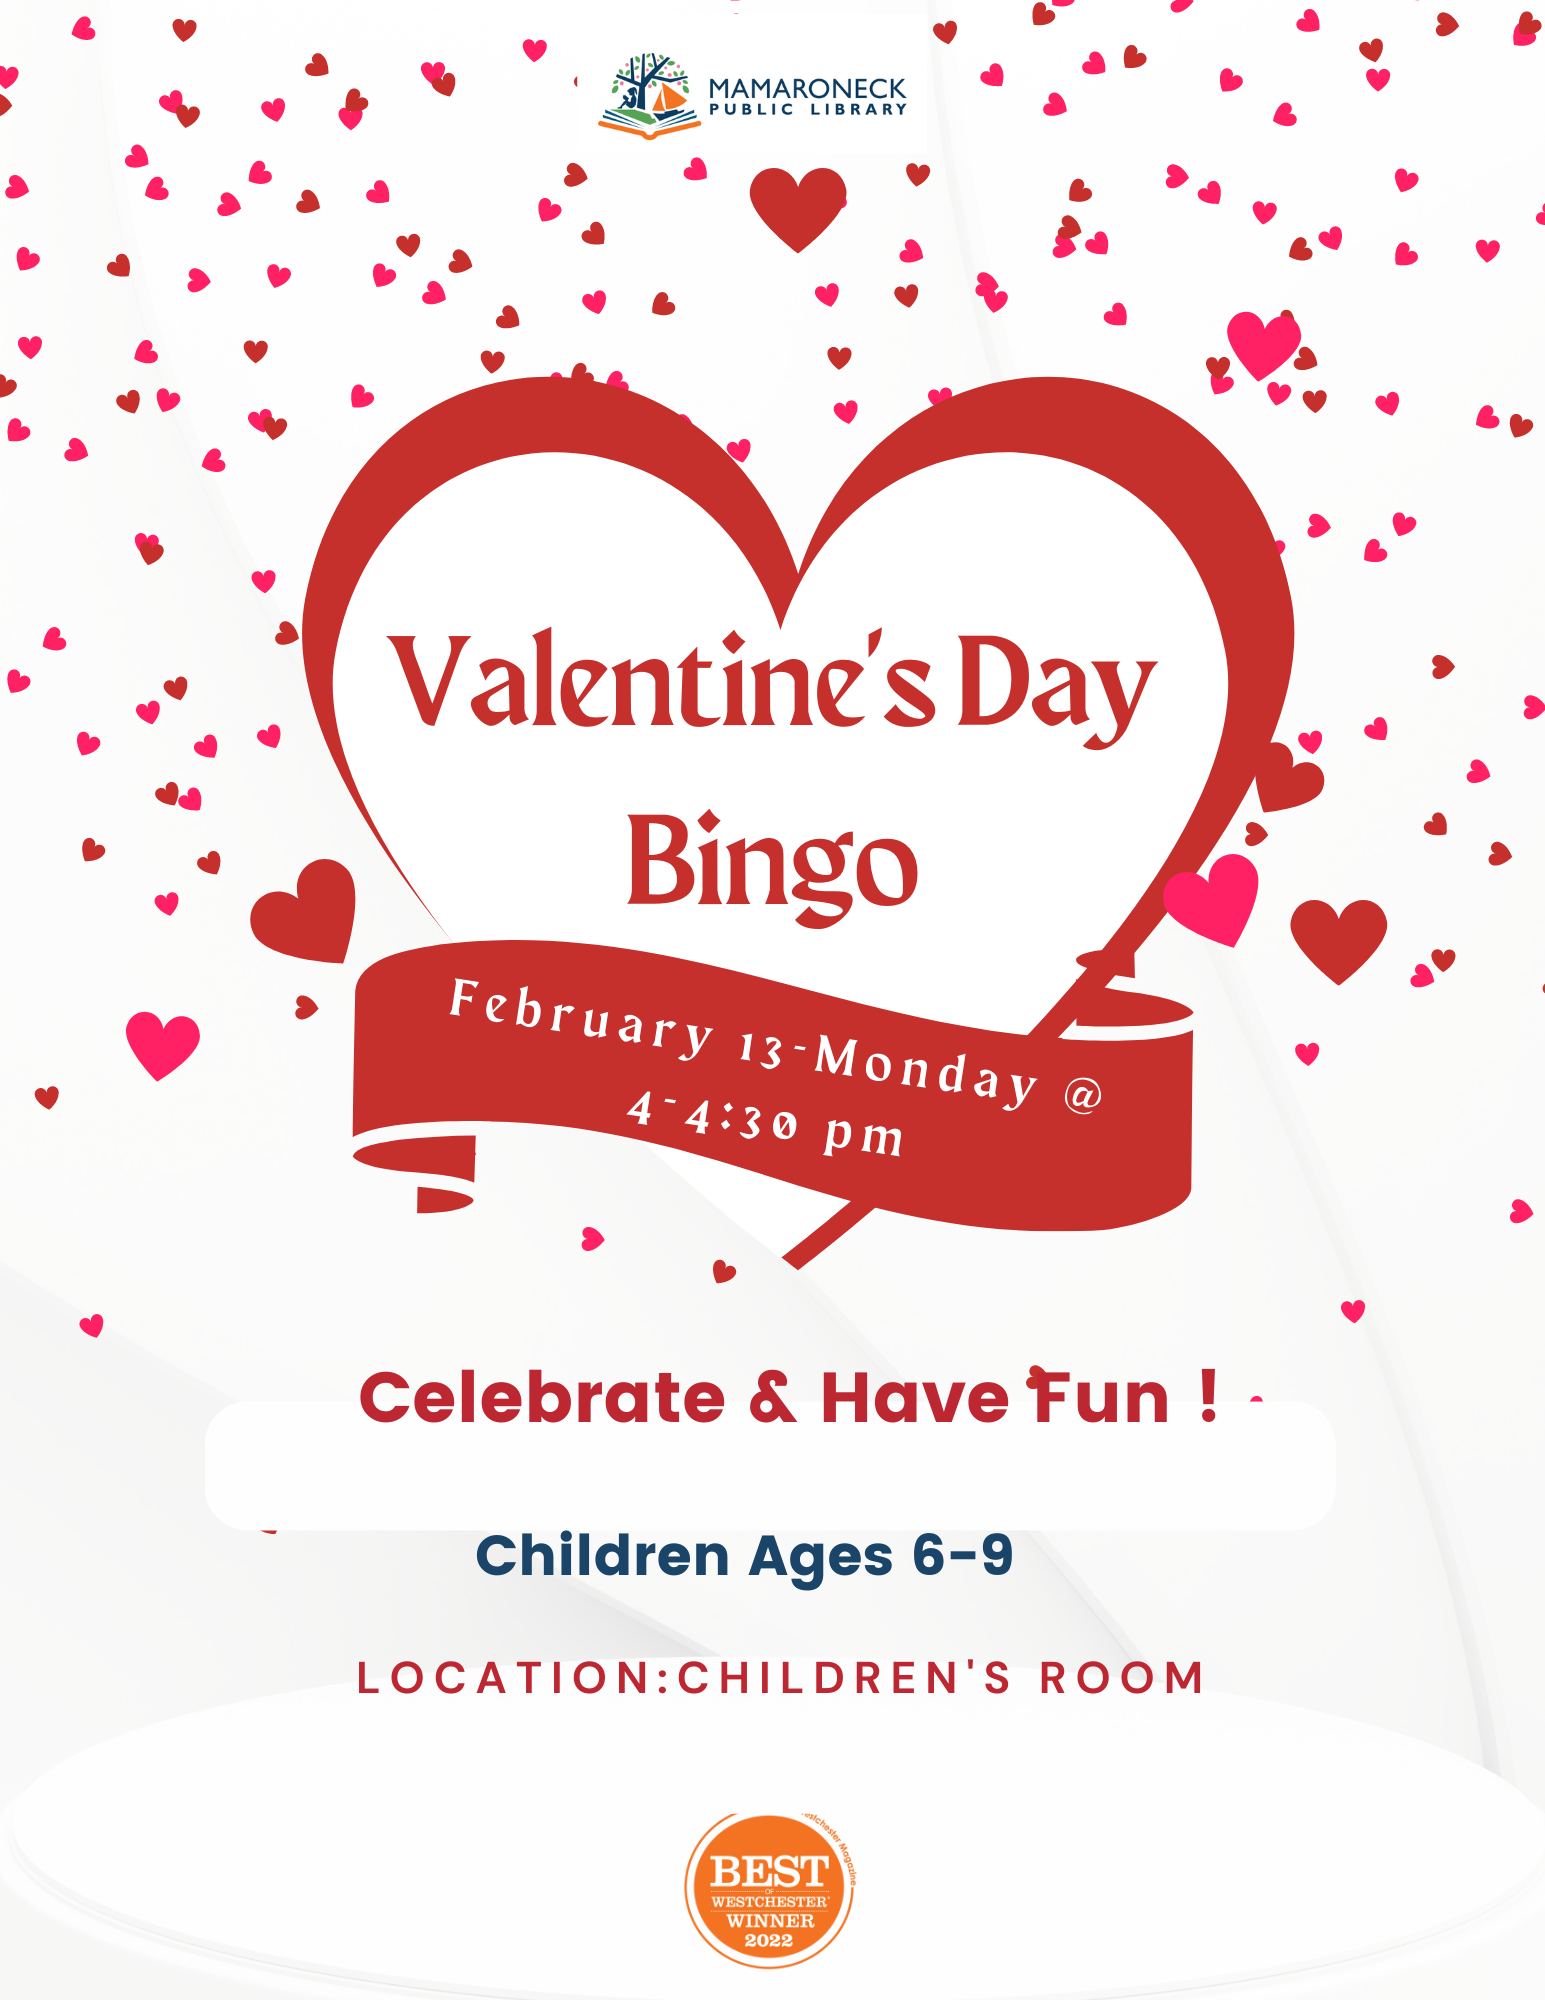 2/13 4 - 4:30pm - Valentine's Day bingo in the Children's Room